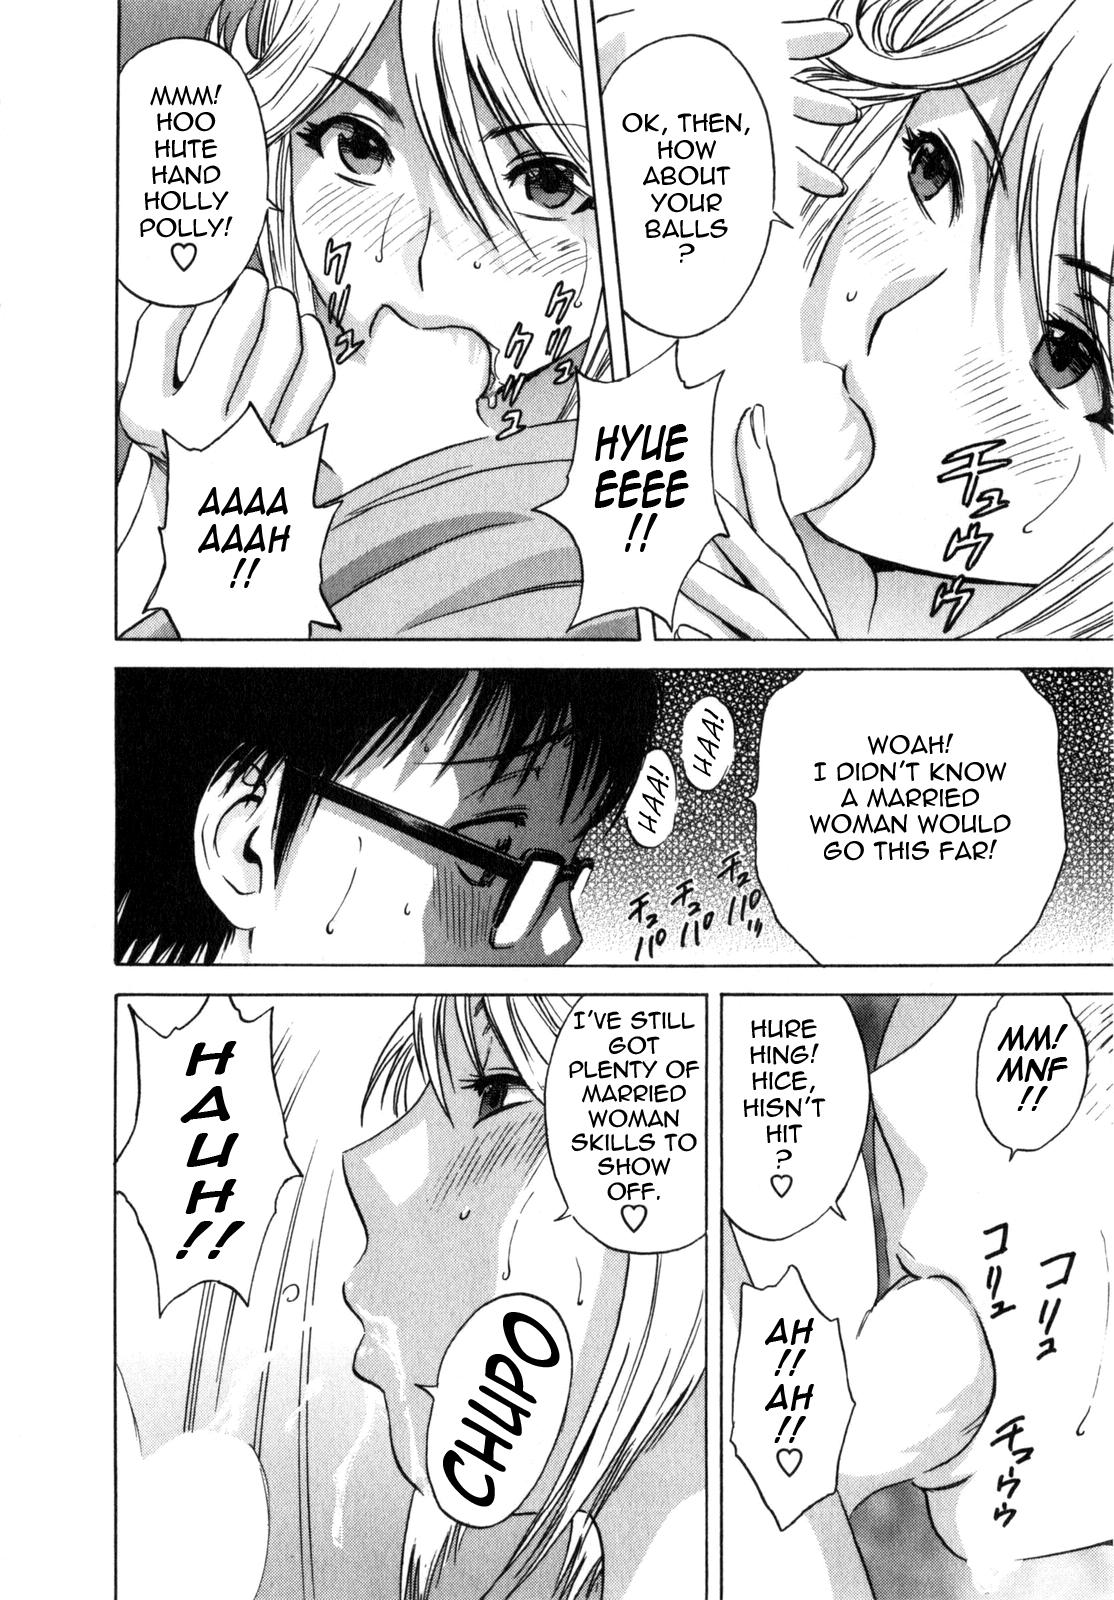 [Hidemaru] Life with Married Women Just Like a Manga 1 - Ch. 1-9 [English] {Tadanohito} 35